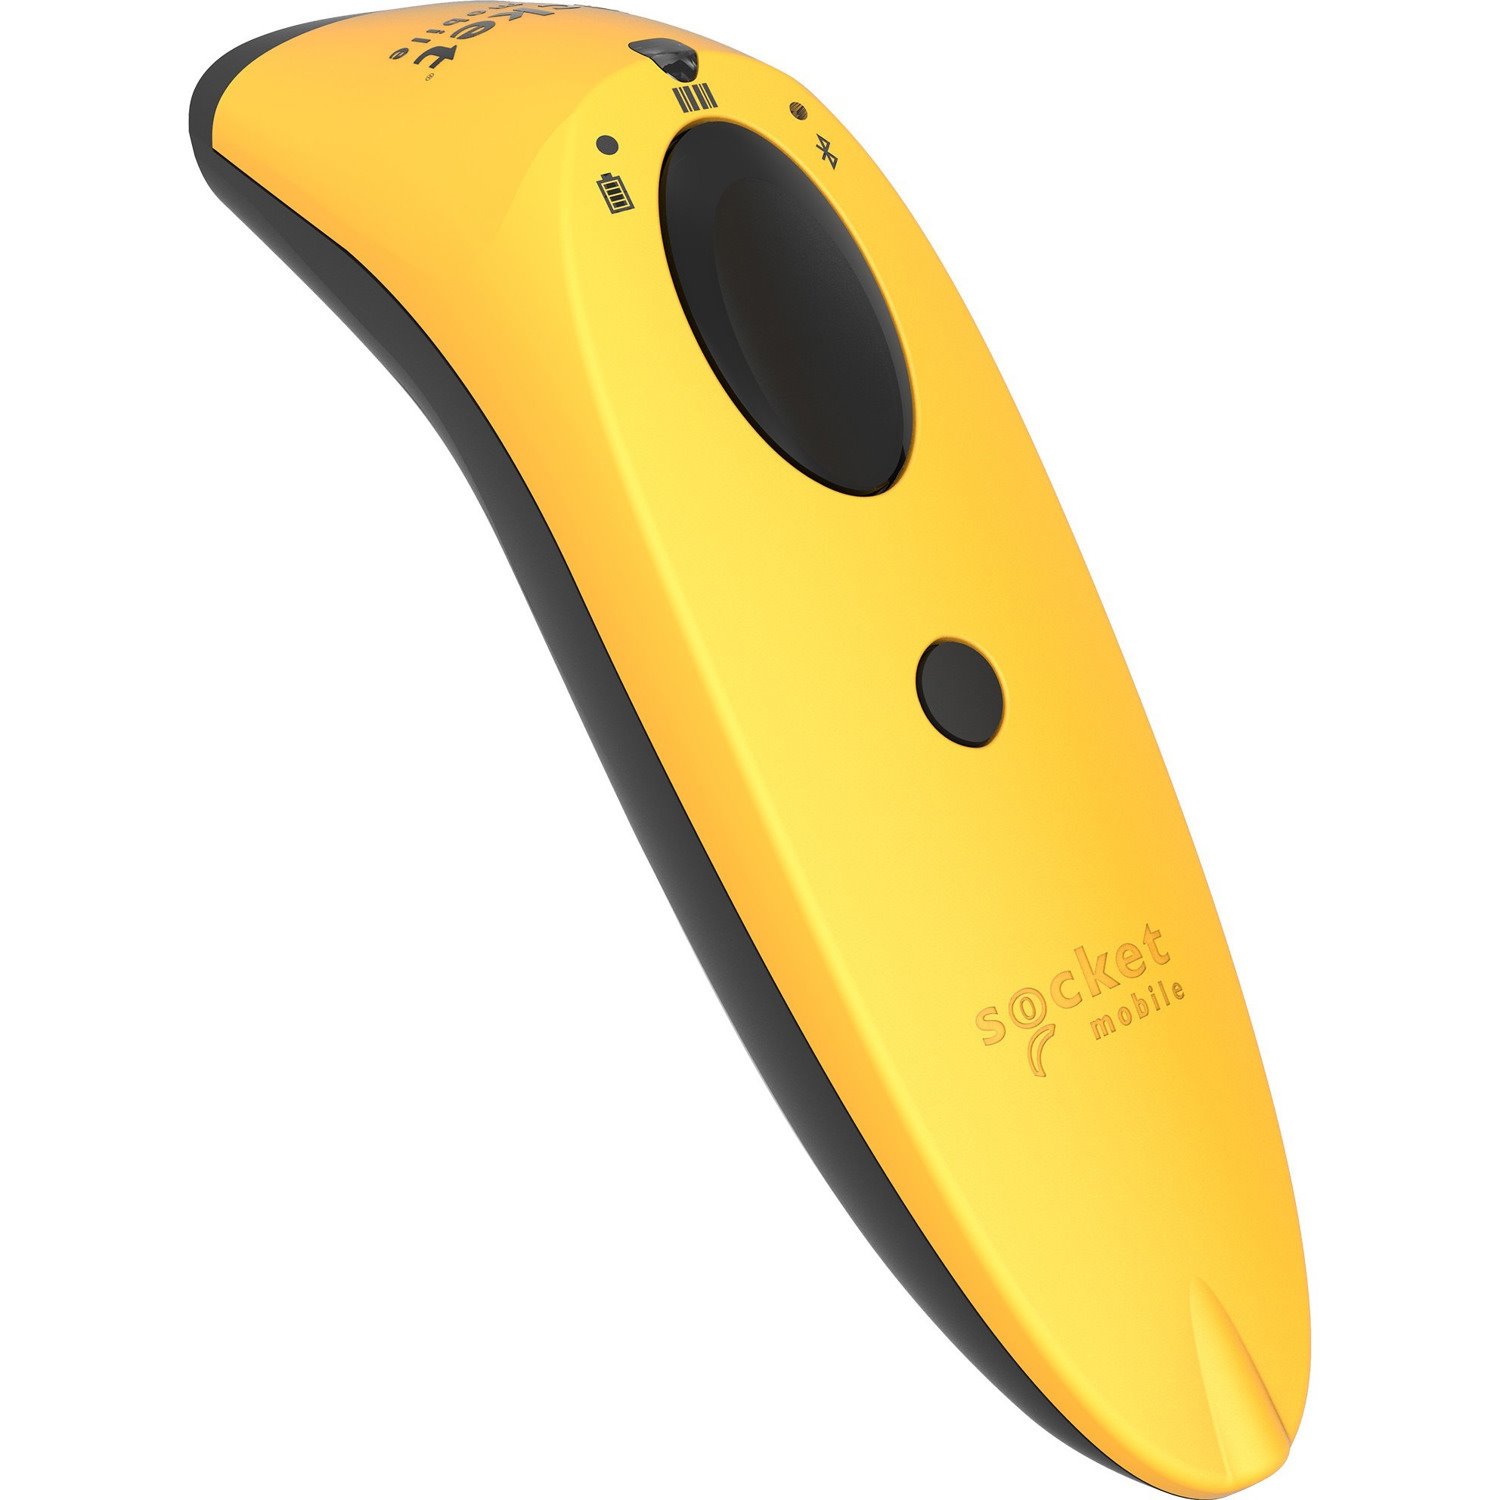 Socket Mobile SocketScan S740 Handheld Barcode Scanner - Wireless Connectivity - Yellow, White